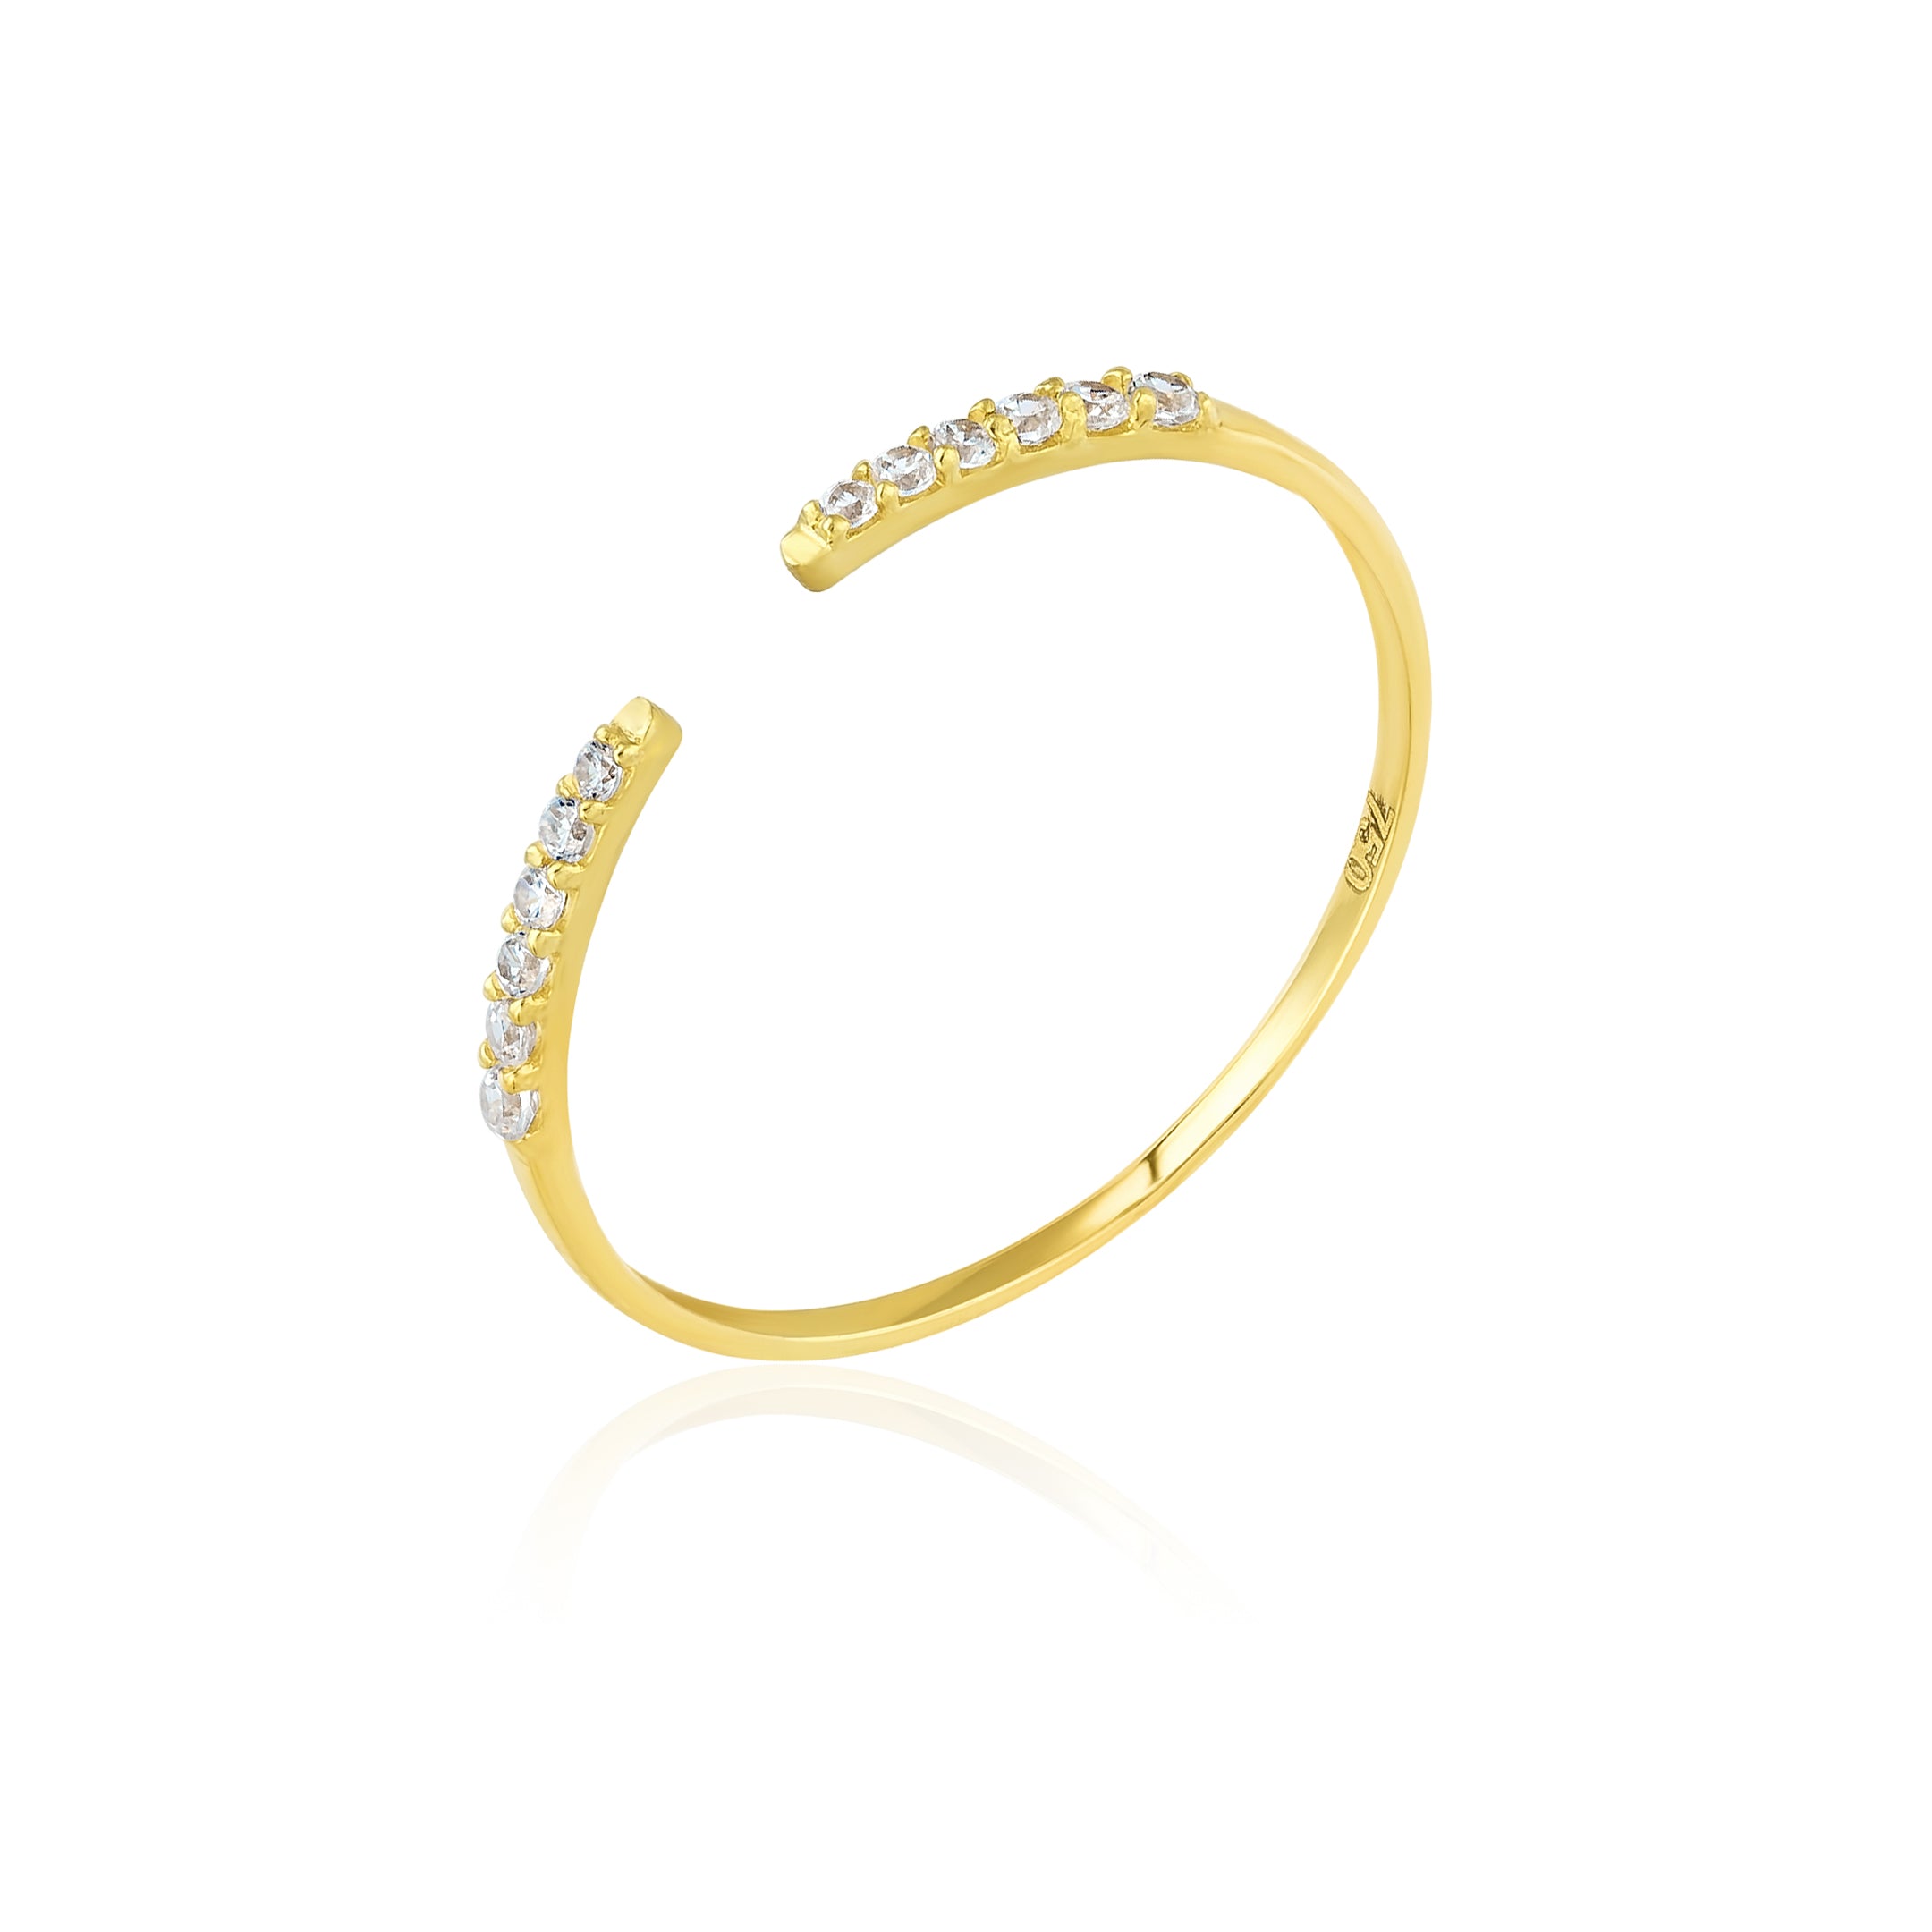 18K Pure Gold Elegant Design w/ Zircon Stone Ring